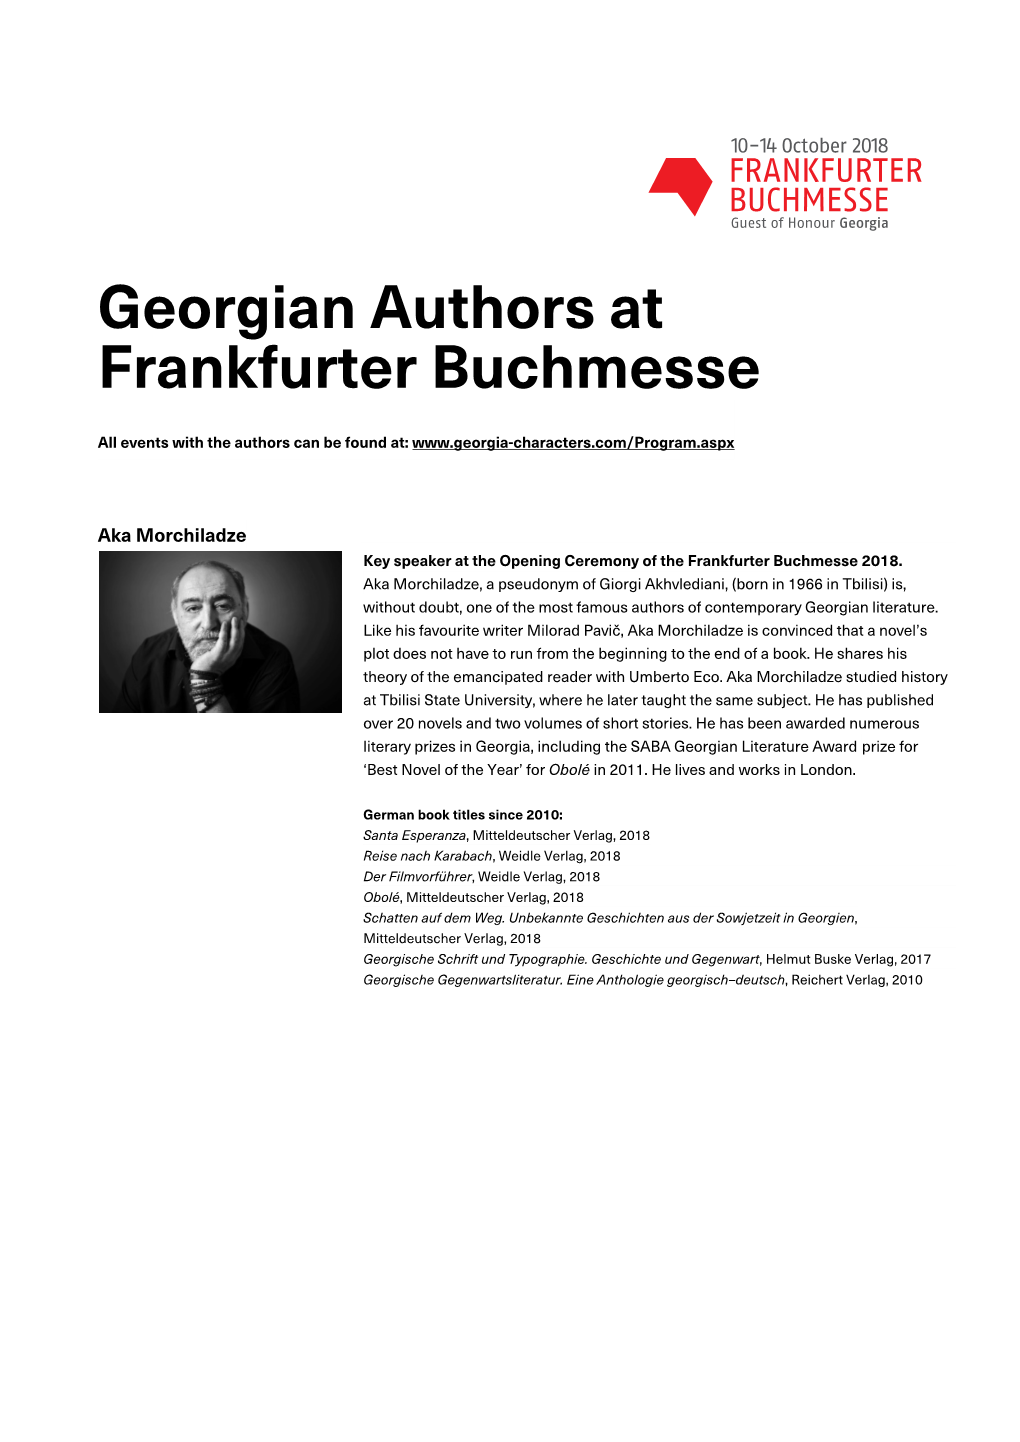 Georgian Authors at Frankfurter Buchmesse 2018 Download